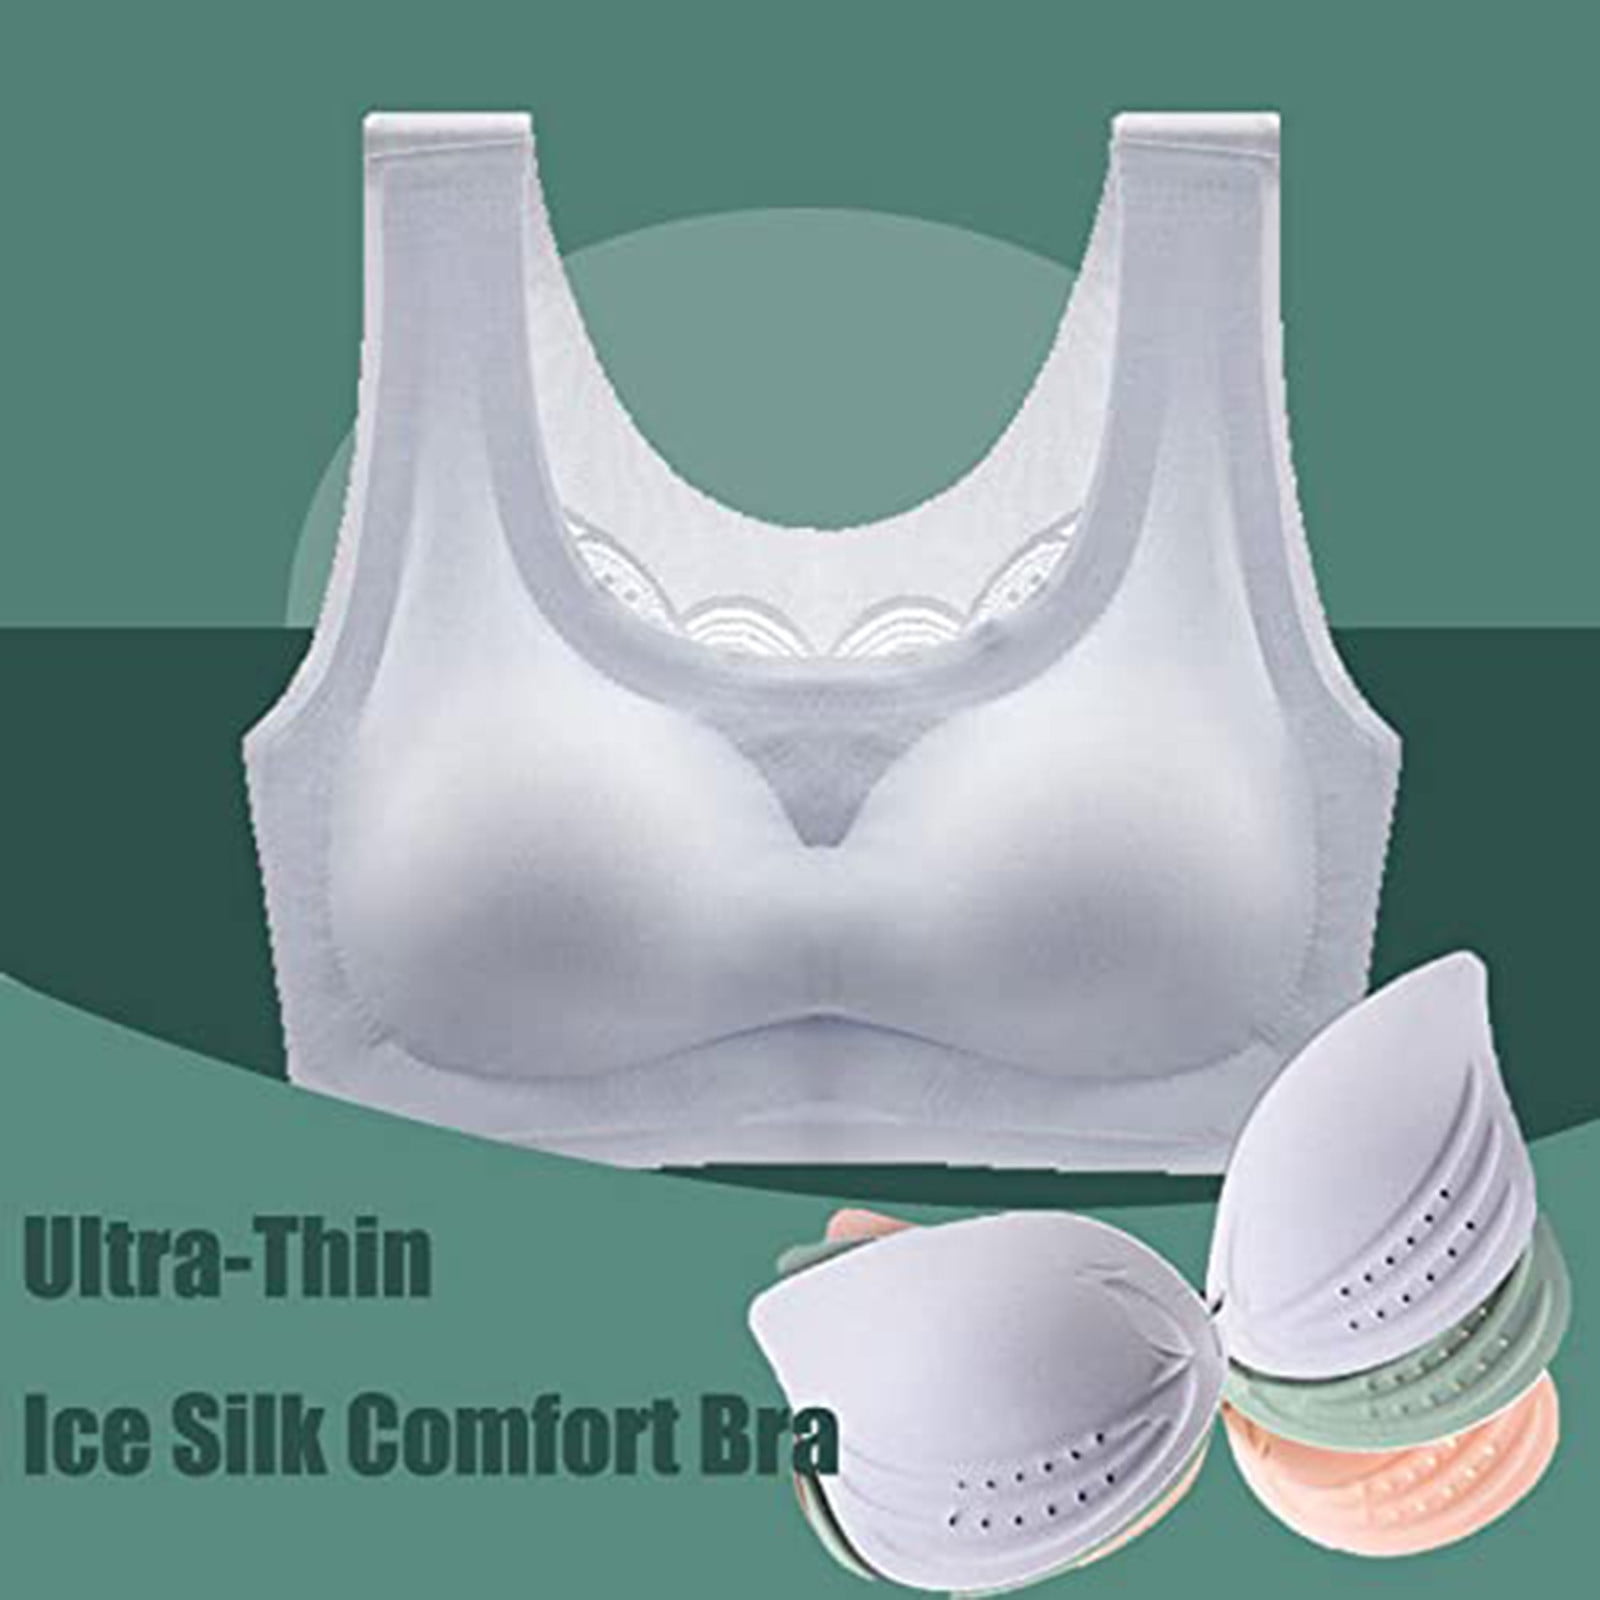  Ultrathin Plus Size Ice Silk Comfort Bra, Breathy